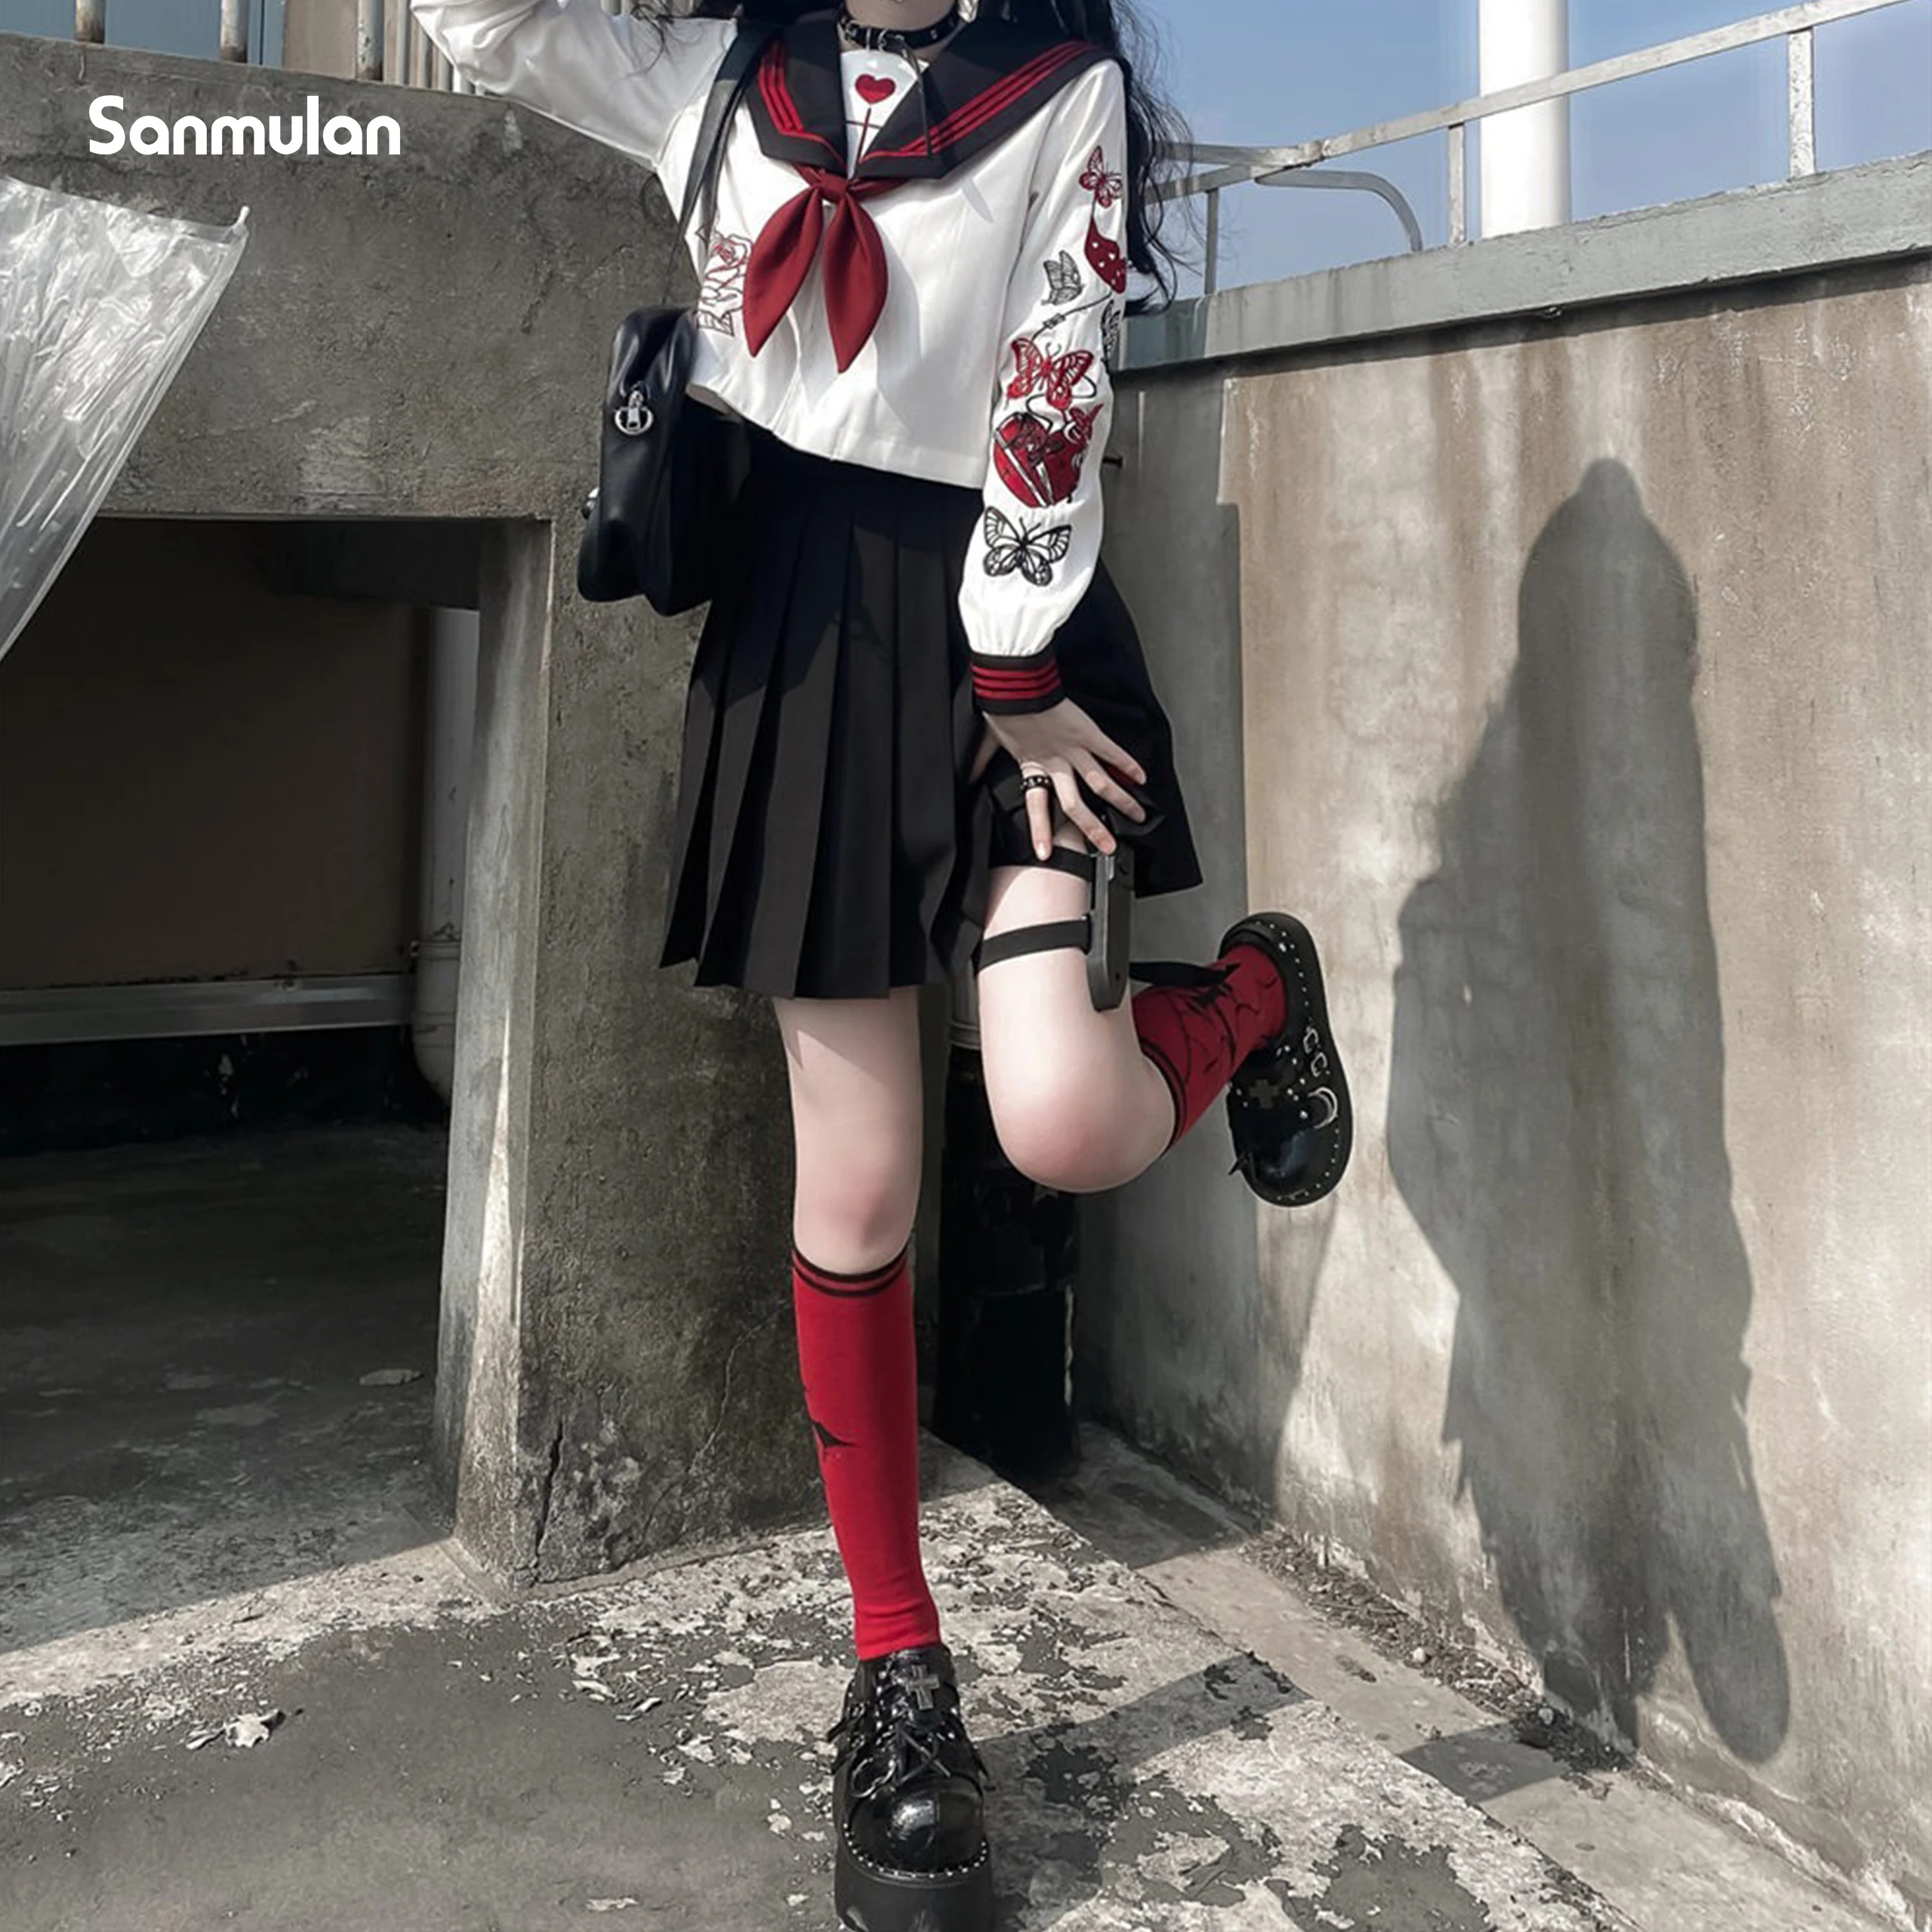 

Nicemix Women Preppy JK Suit Genuine Japanese Dark Jk Uniform Shirt + Black Pleated Skirt Punk Girl Embroidered Sailor 2pcs Suit